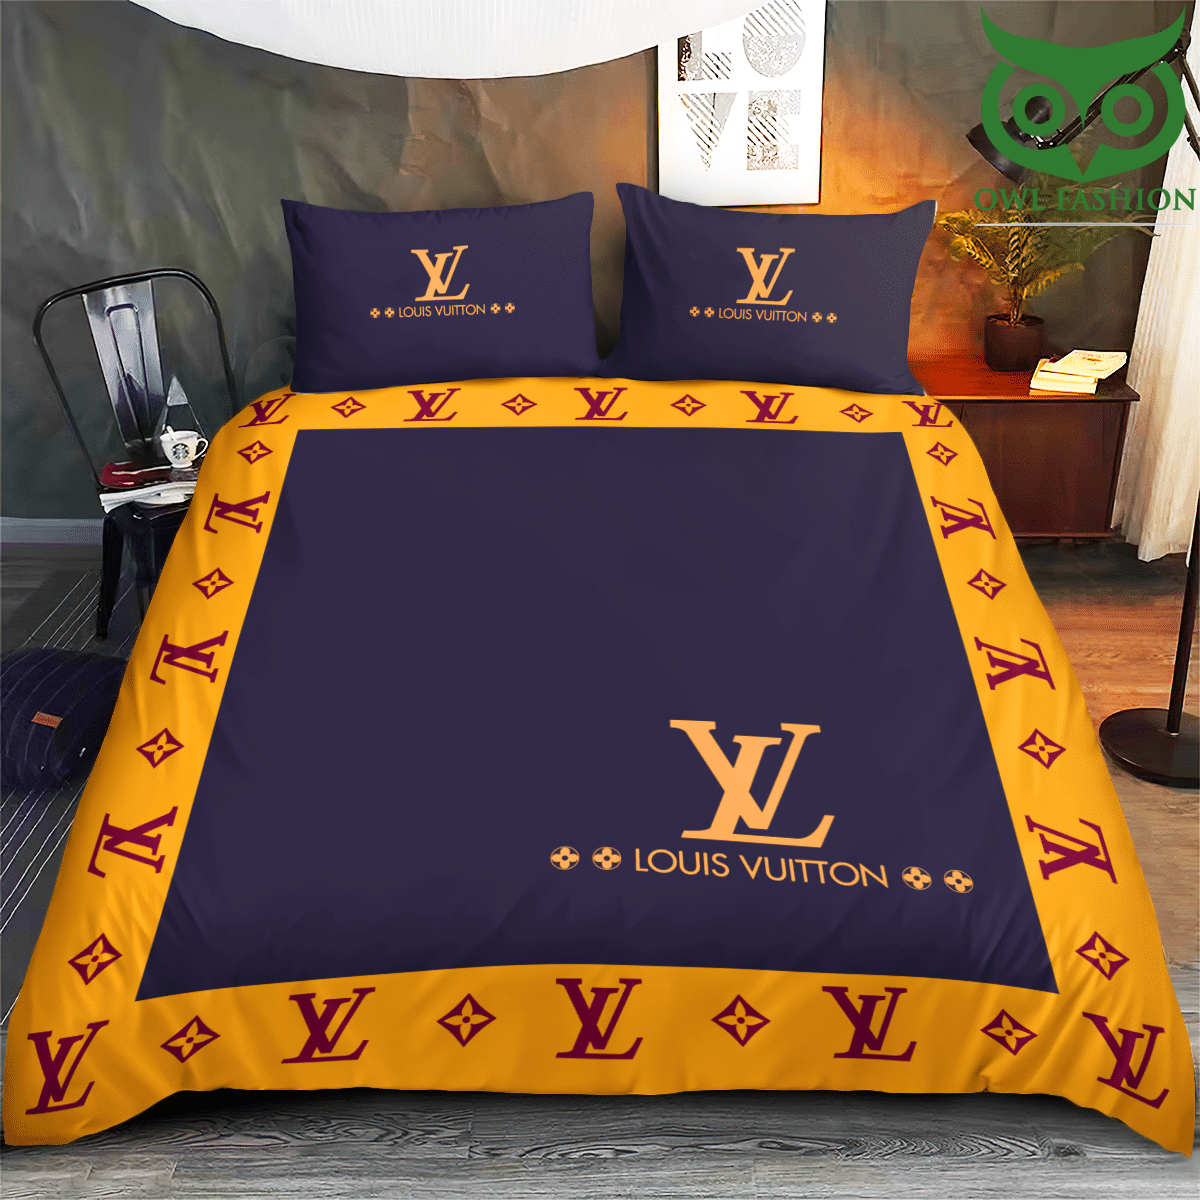 Louis Vuitton golden logo on navy tone bedding set